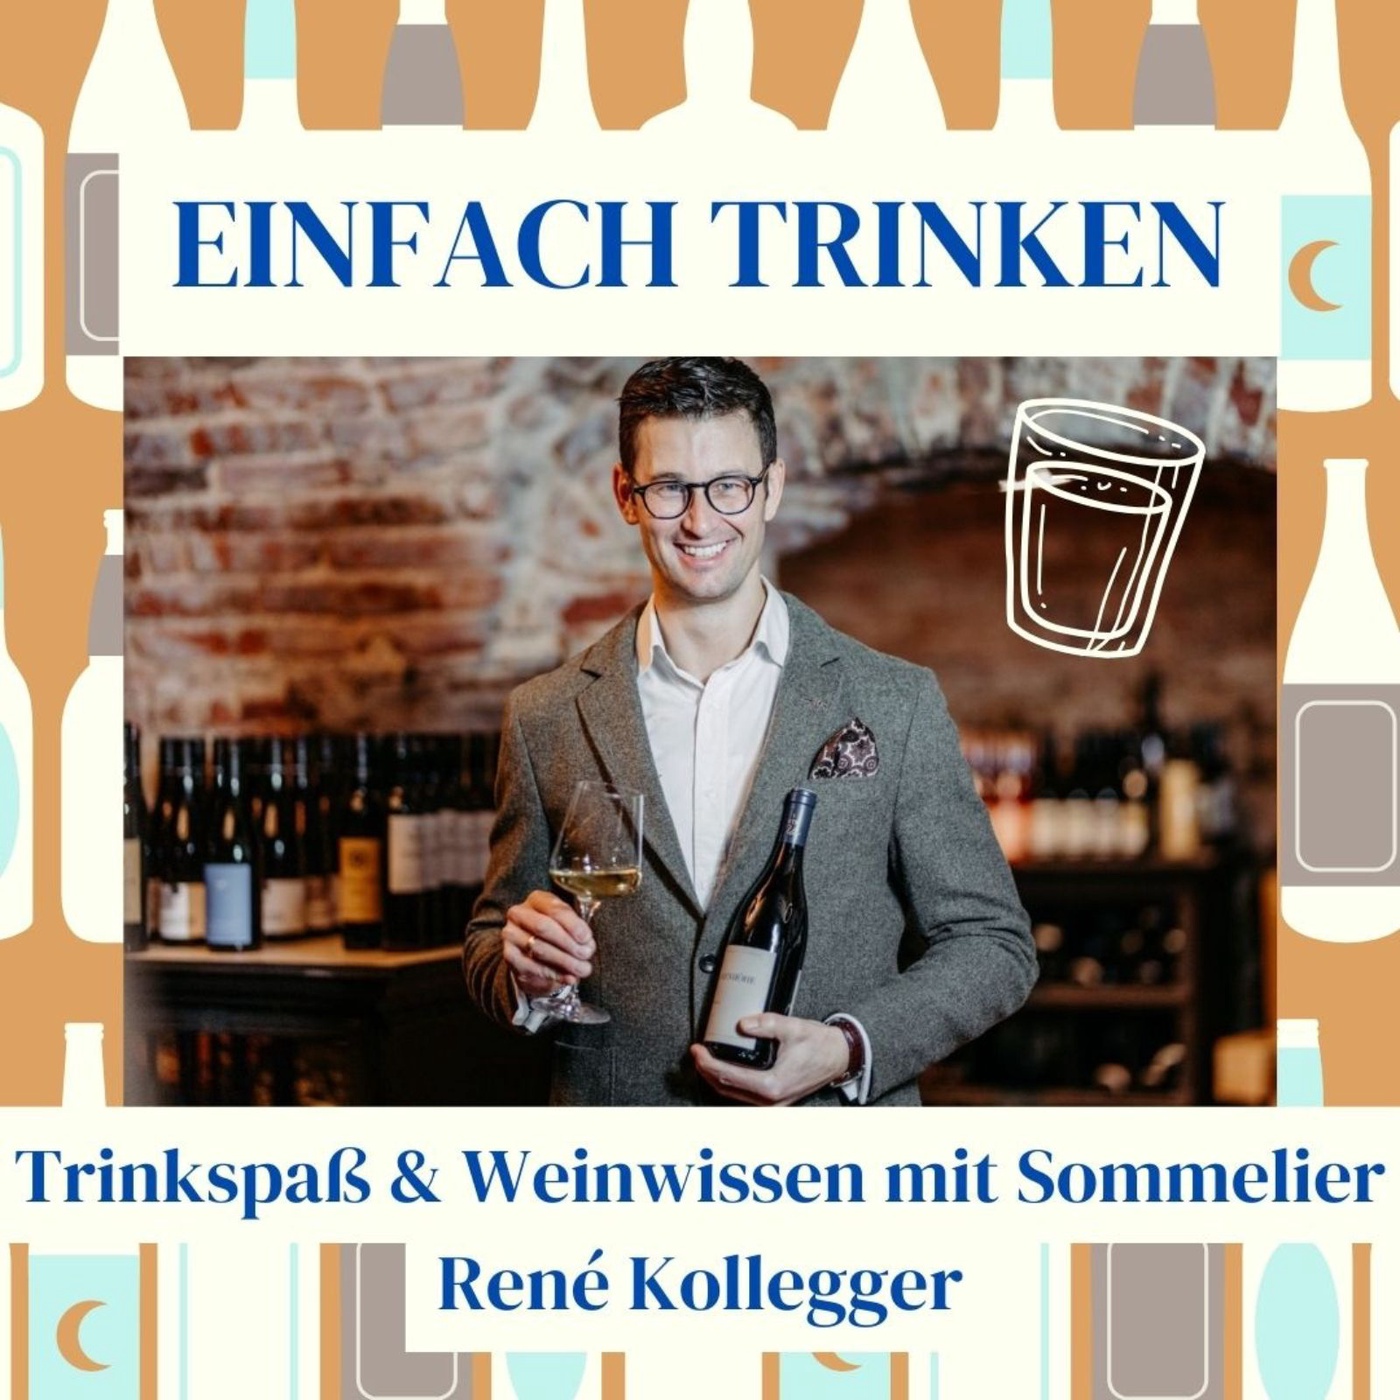 #31 René Kollegger plus Weinkarte neu im Schlosskeller Südsteiermark